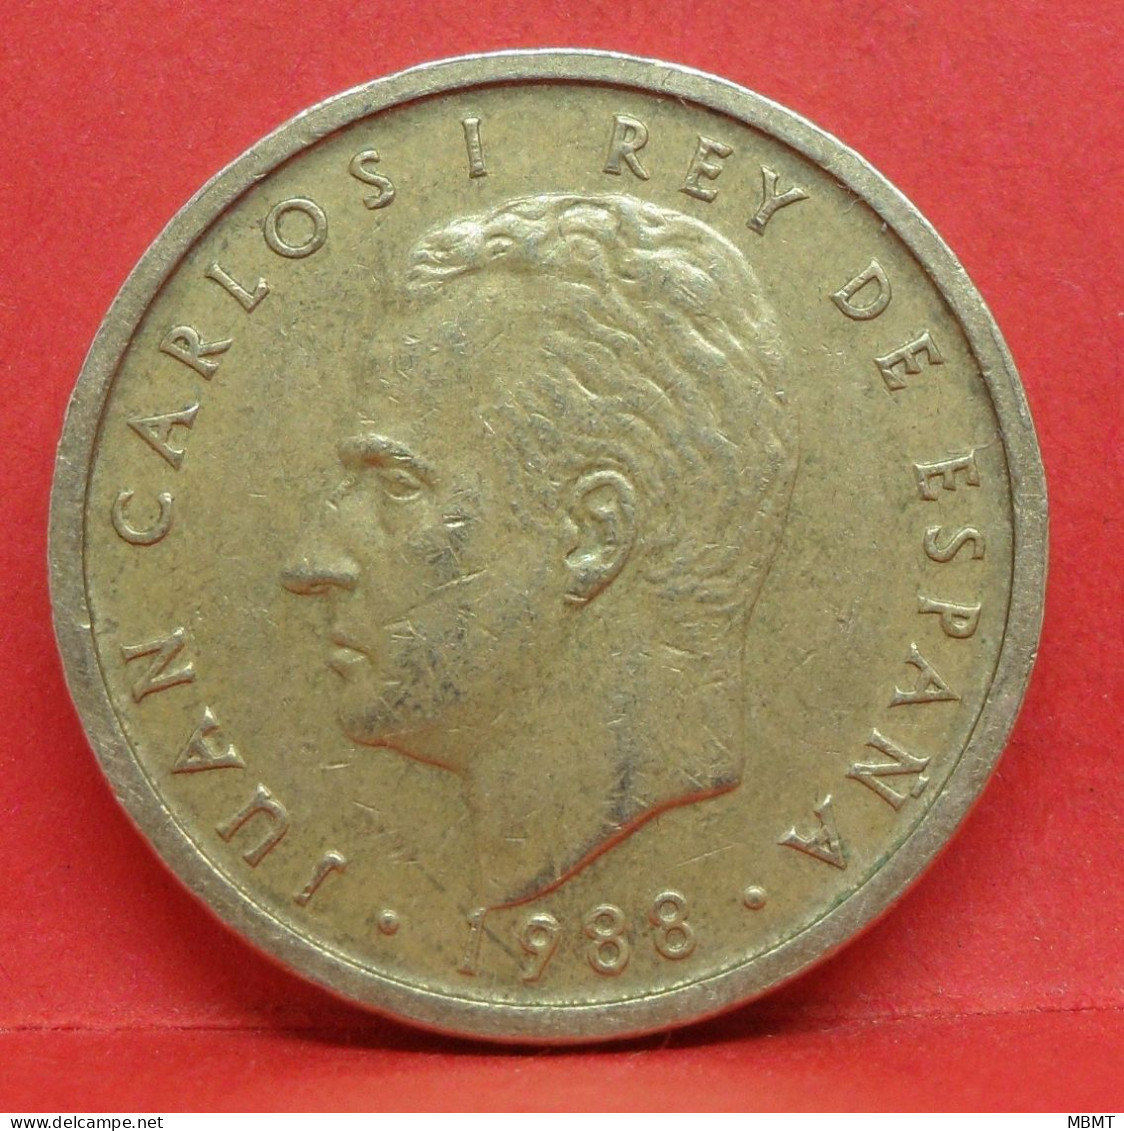 100 Pesetas 1988 - TTB - Pièce Monnaie Espagne - Article N°2496 - 100 Peseta